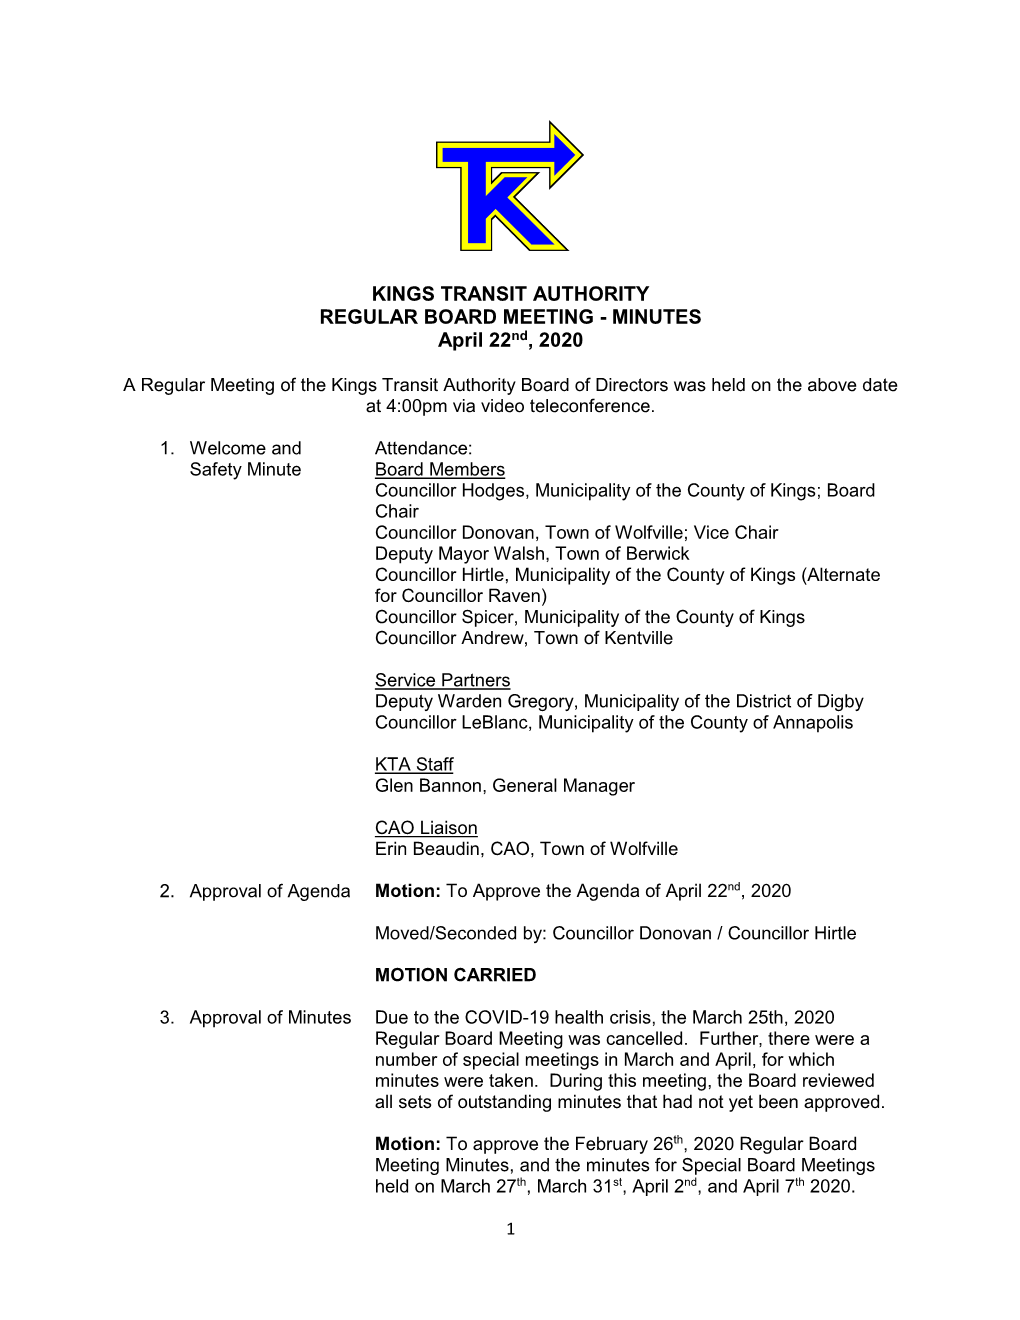 KINGS TRANSIT AUTHORITY REGULAR BOARD MEETING - MINUTES April 22Nd, 2020